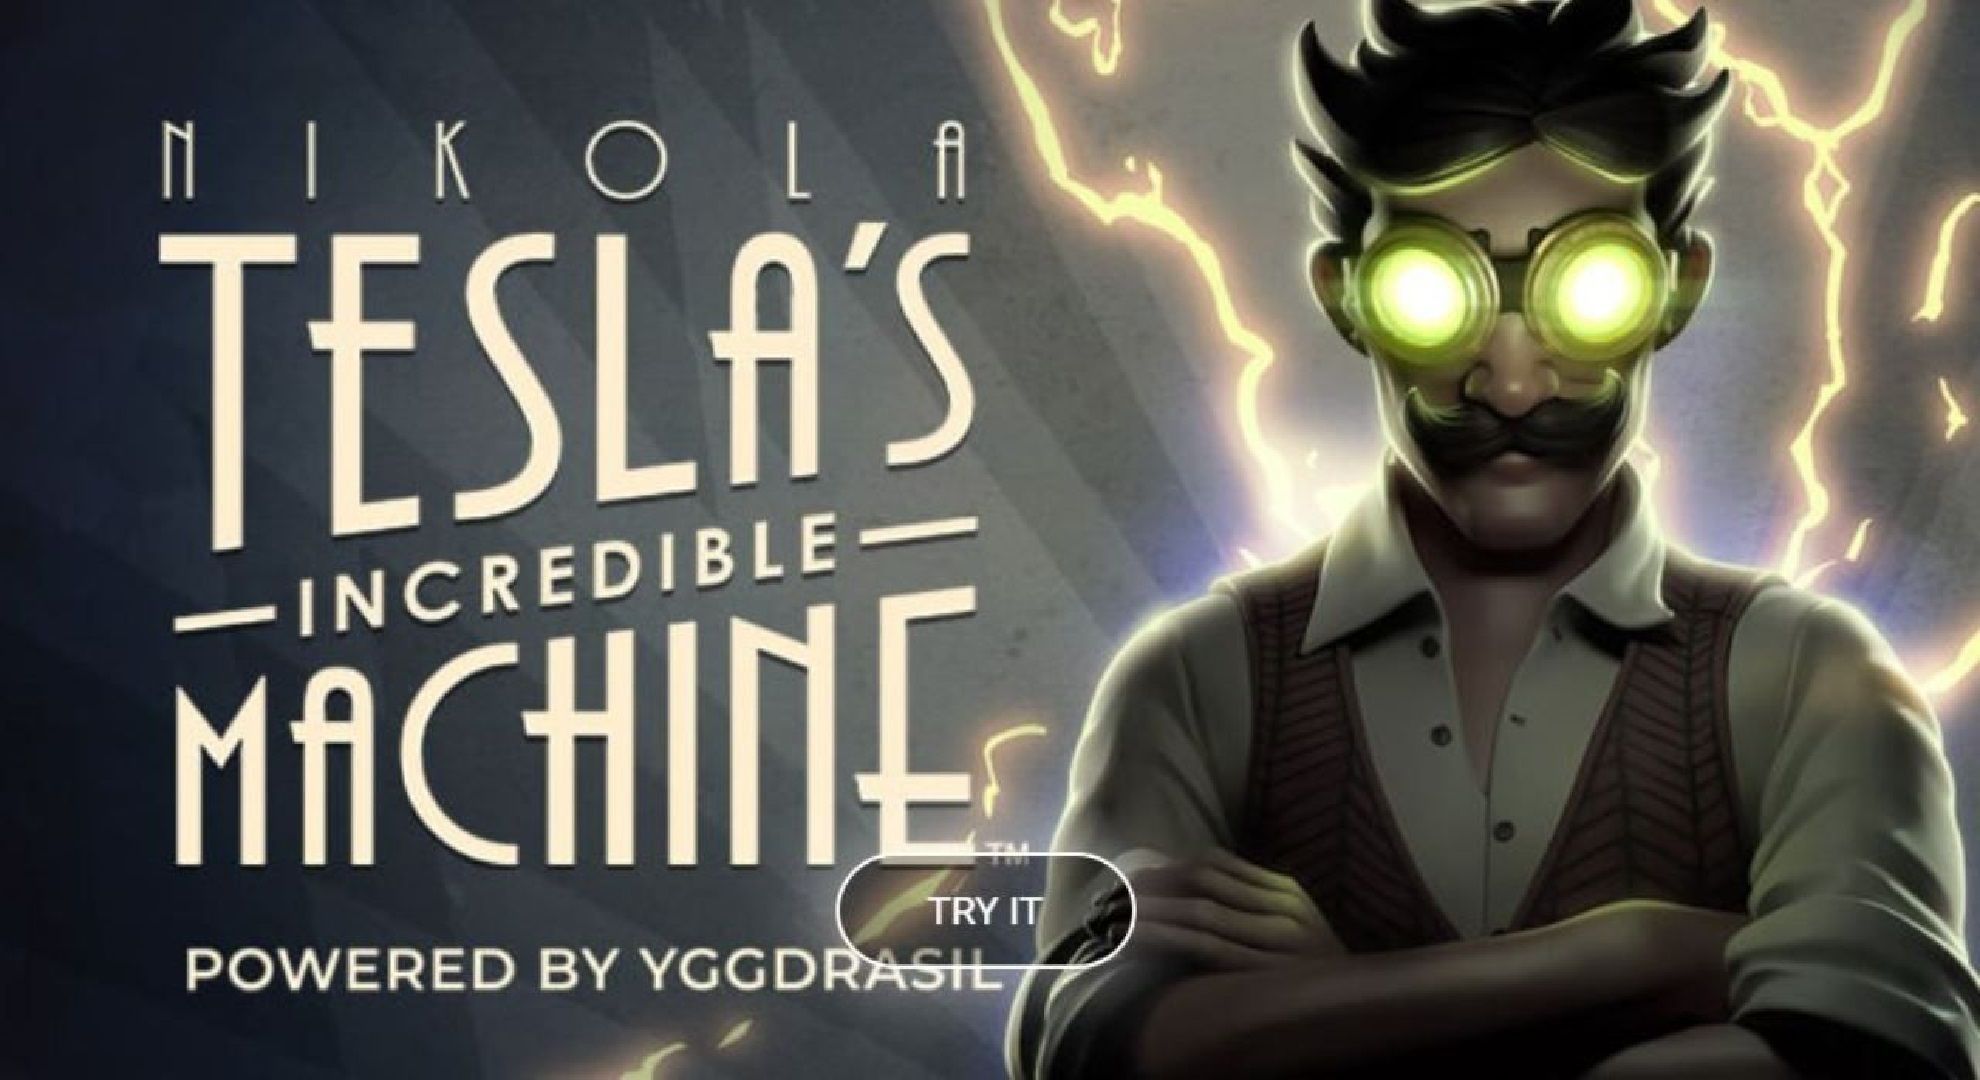 Nikola Tesla's Incredible Machine | SPIKE